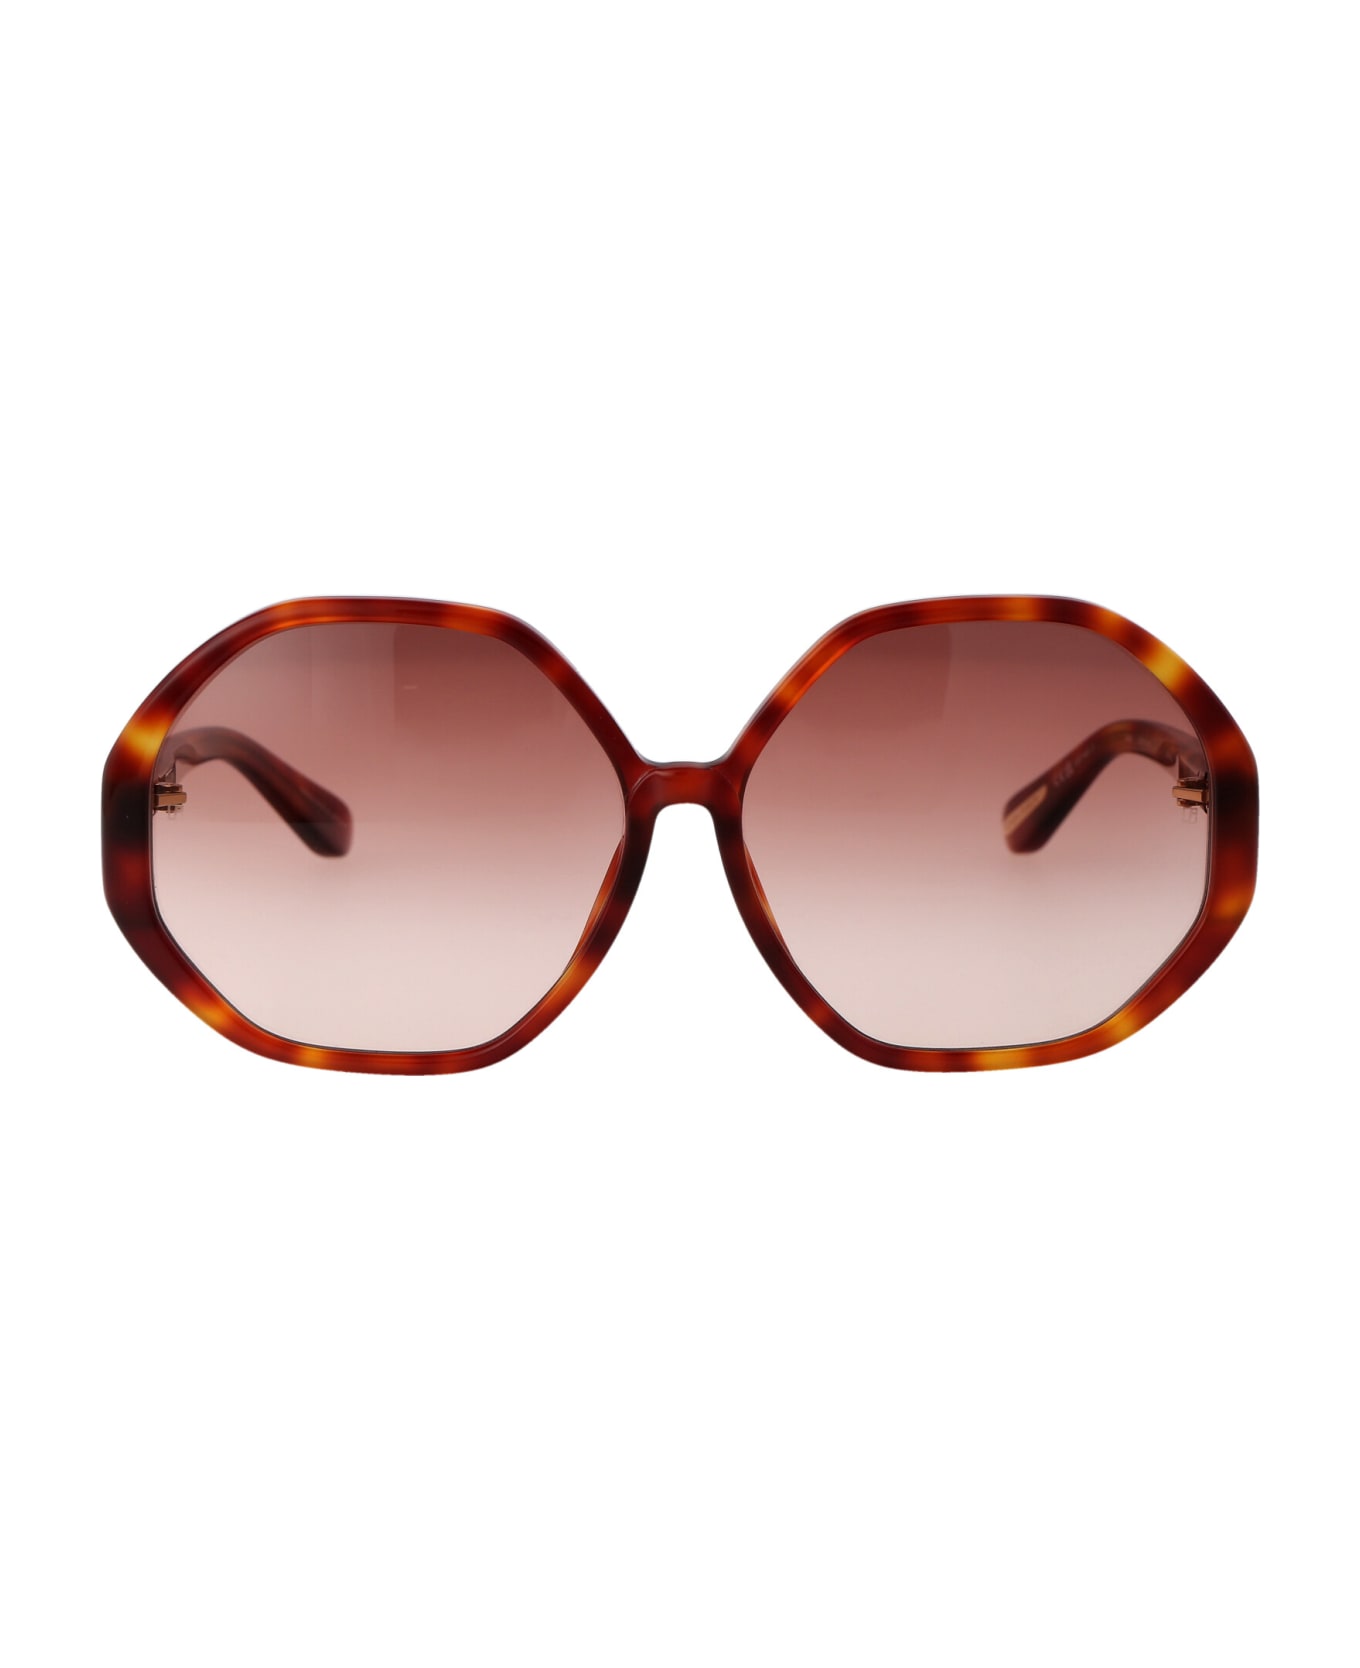 Linda Farrow Paloma Sunglasses - 03 AMBER AMBER T-SHELL OPTICAL